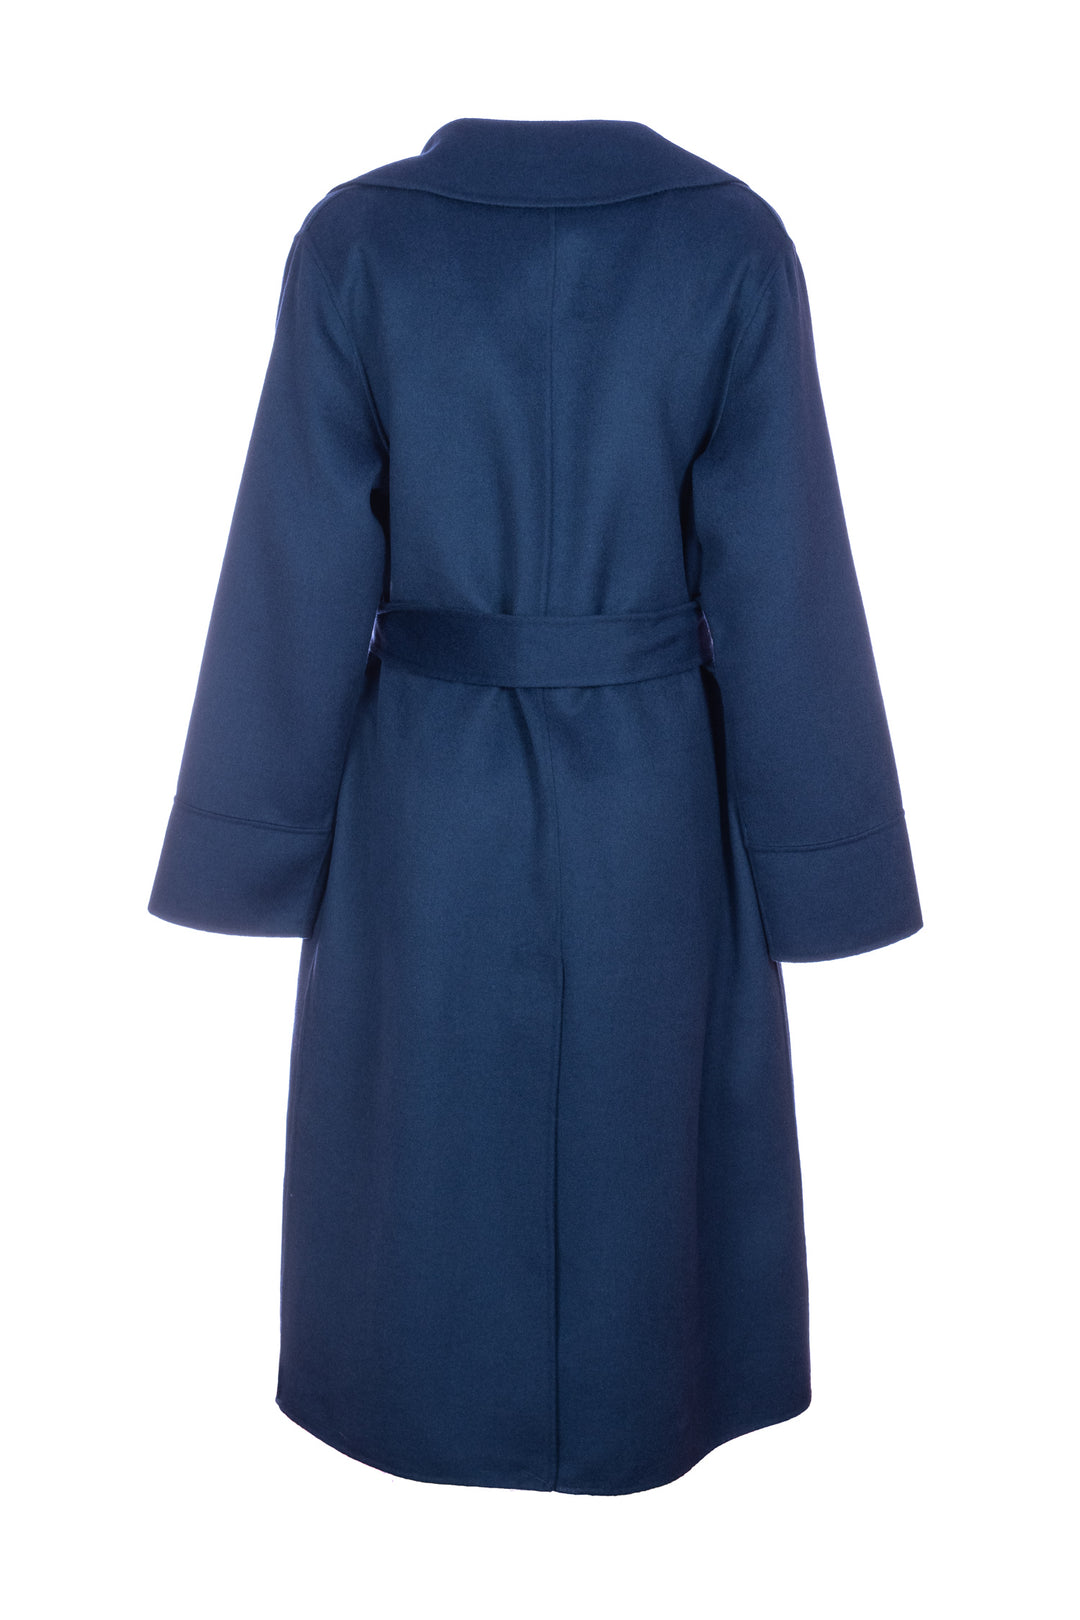 KAOS Cappotto lungo blu in panno misto lana con cintura - Mancinelli 1954